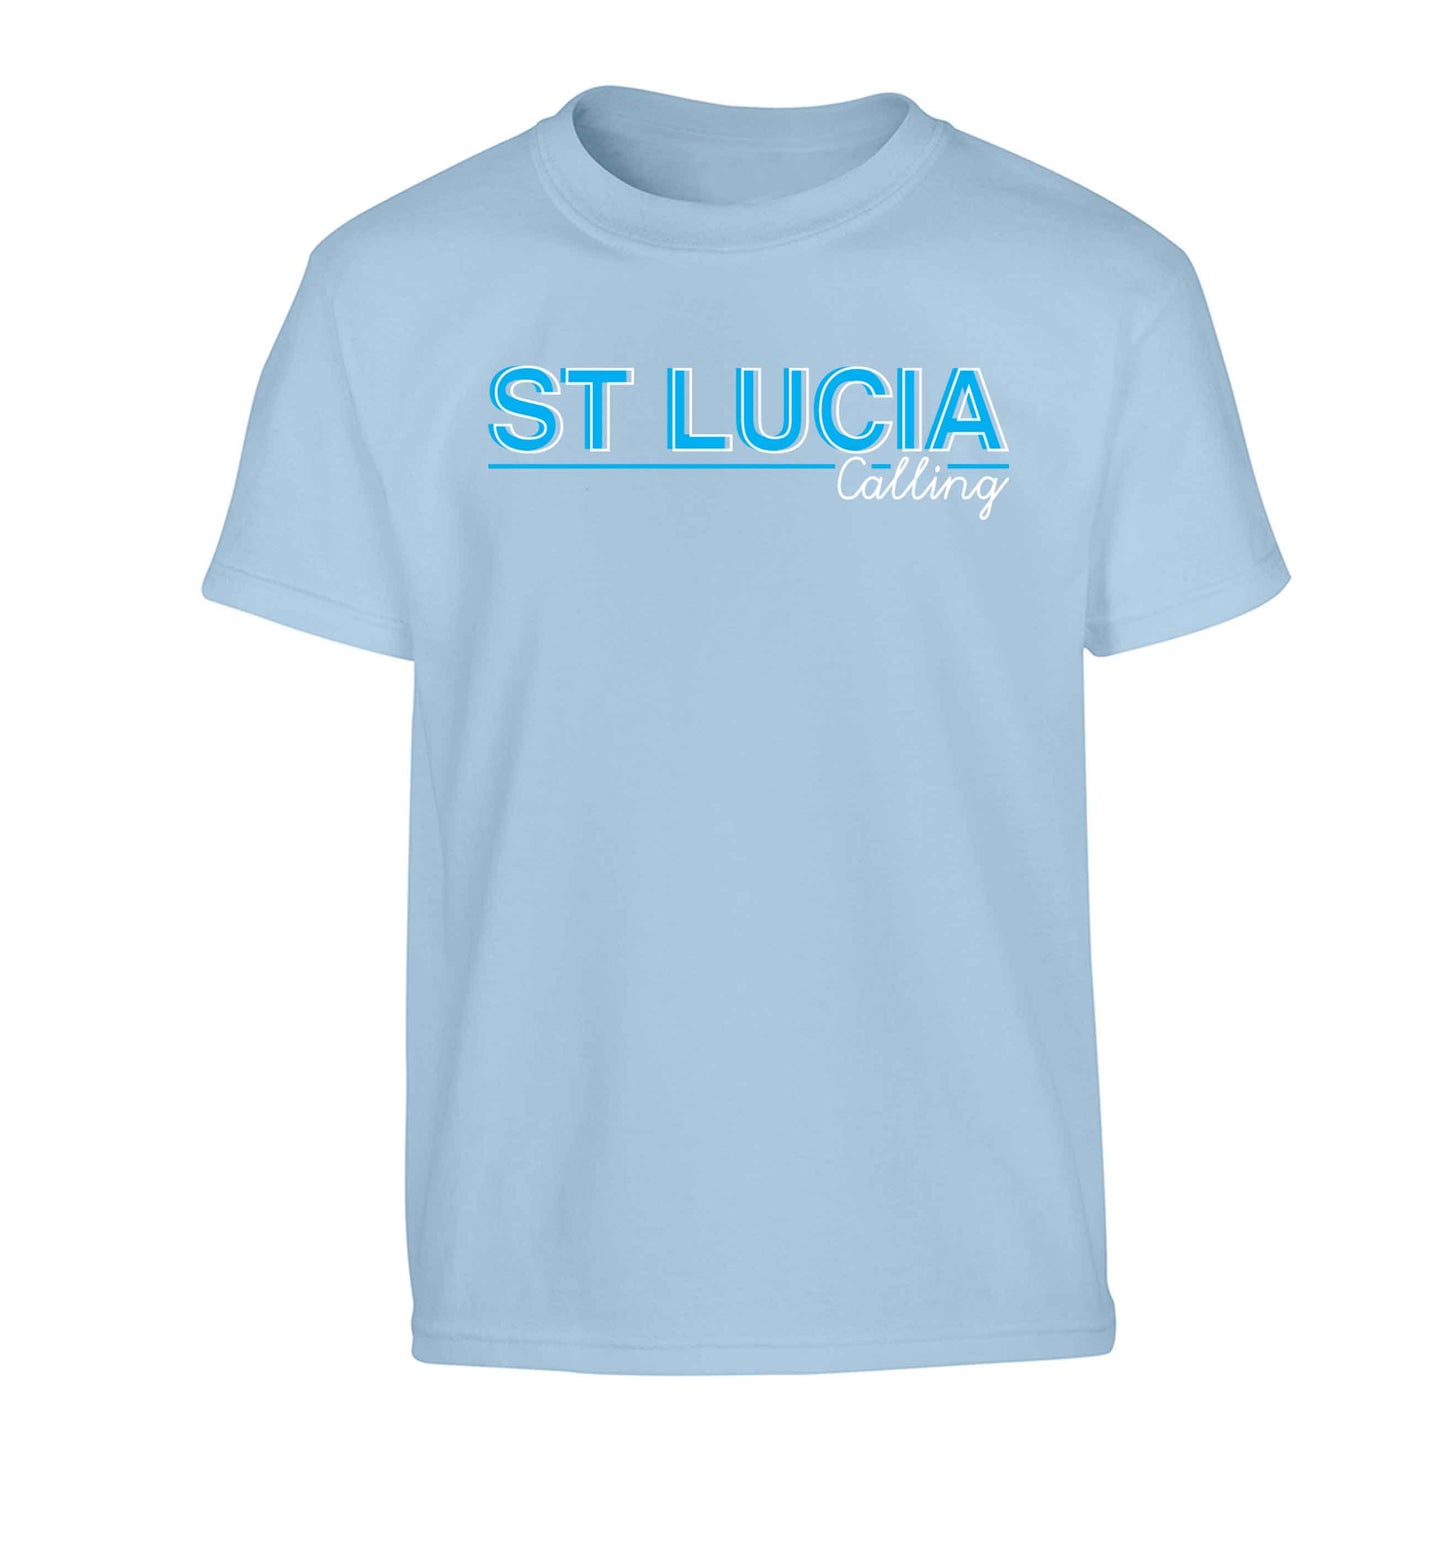 St Lucia calling Children's light blue Tshirt 12-13 Years